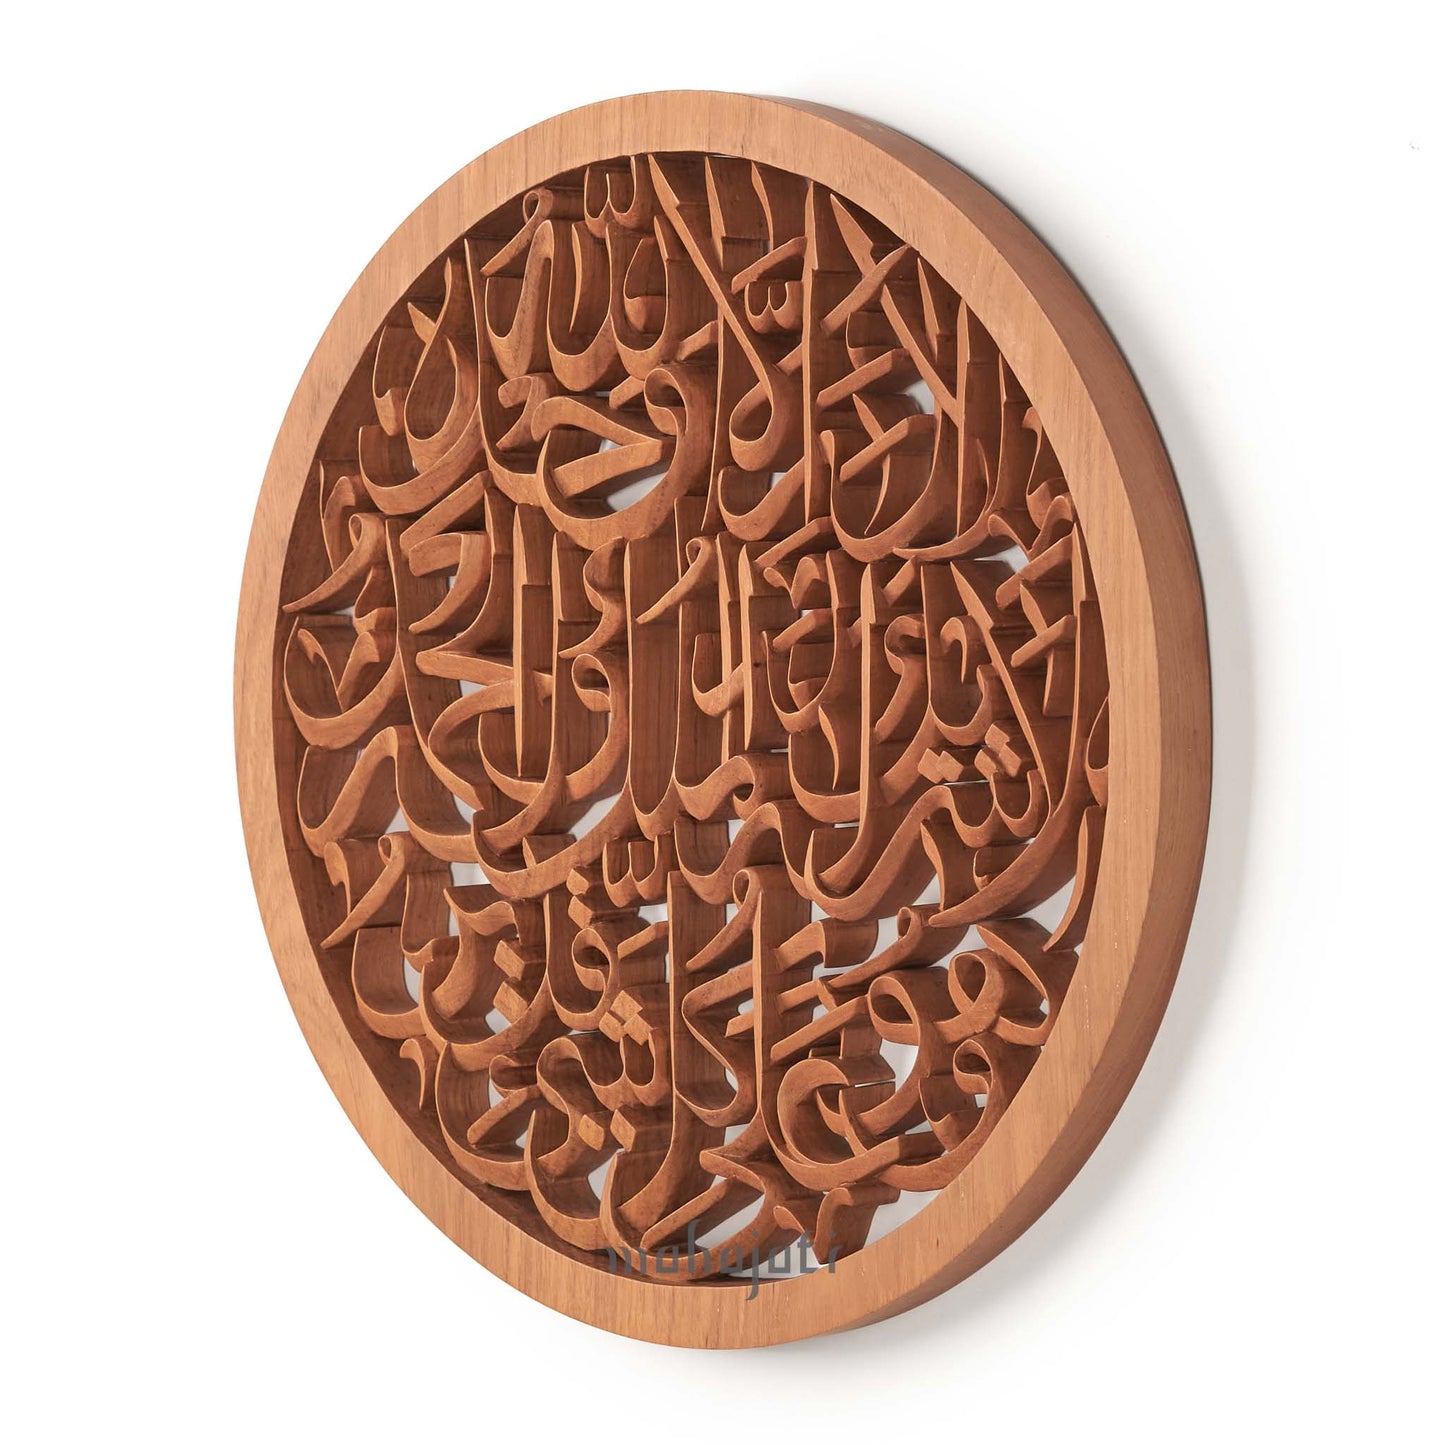 Lailahaillallah Arabic Calligraphy Wooden Wall Decor